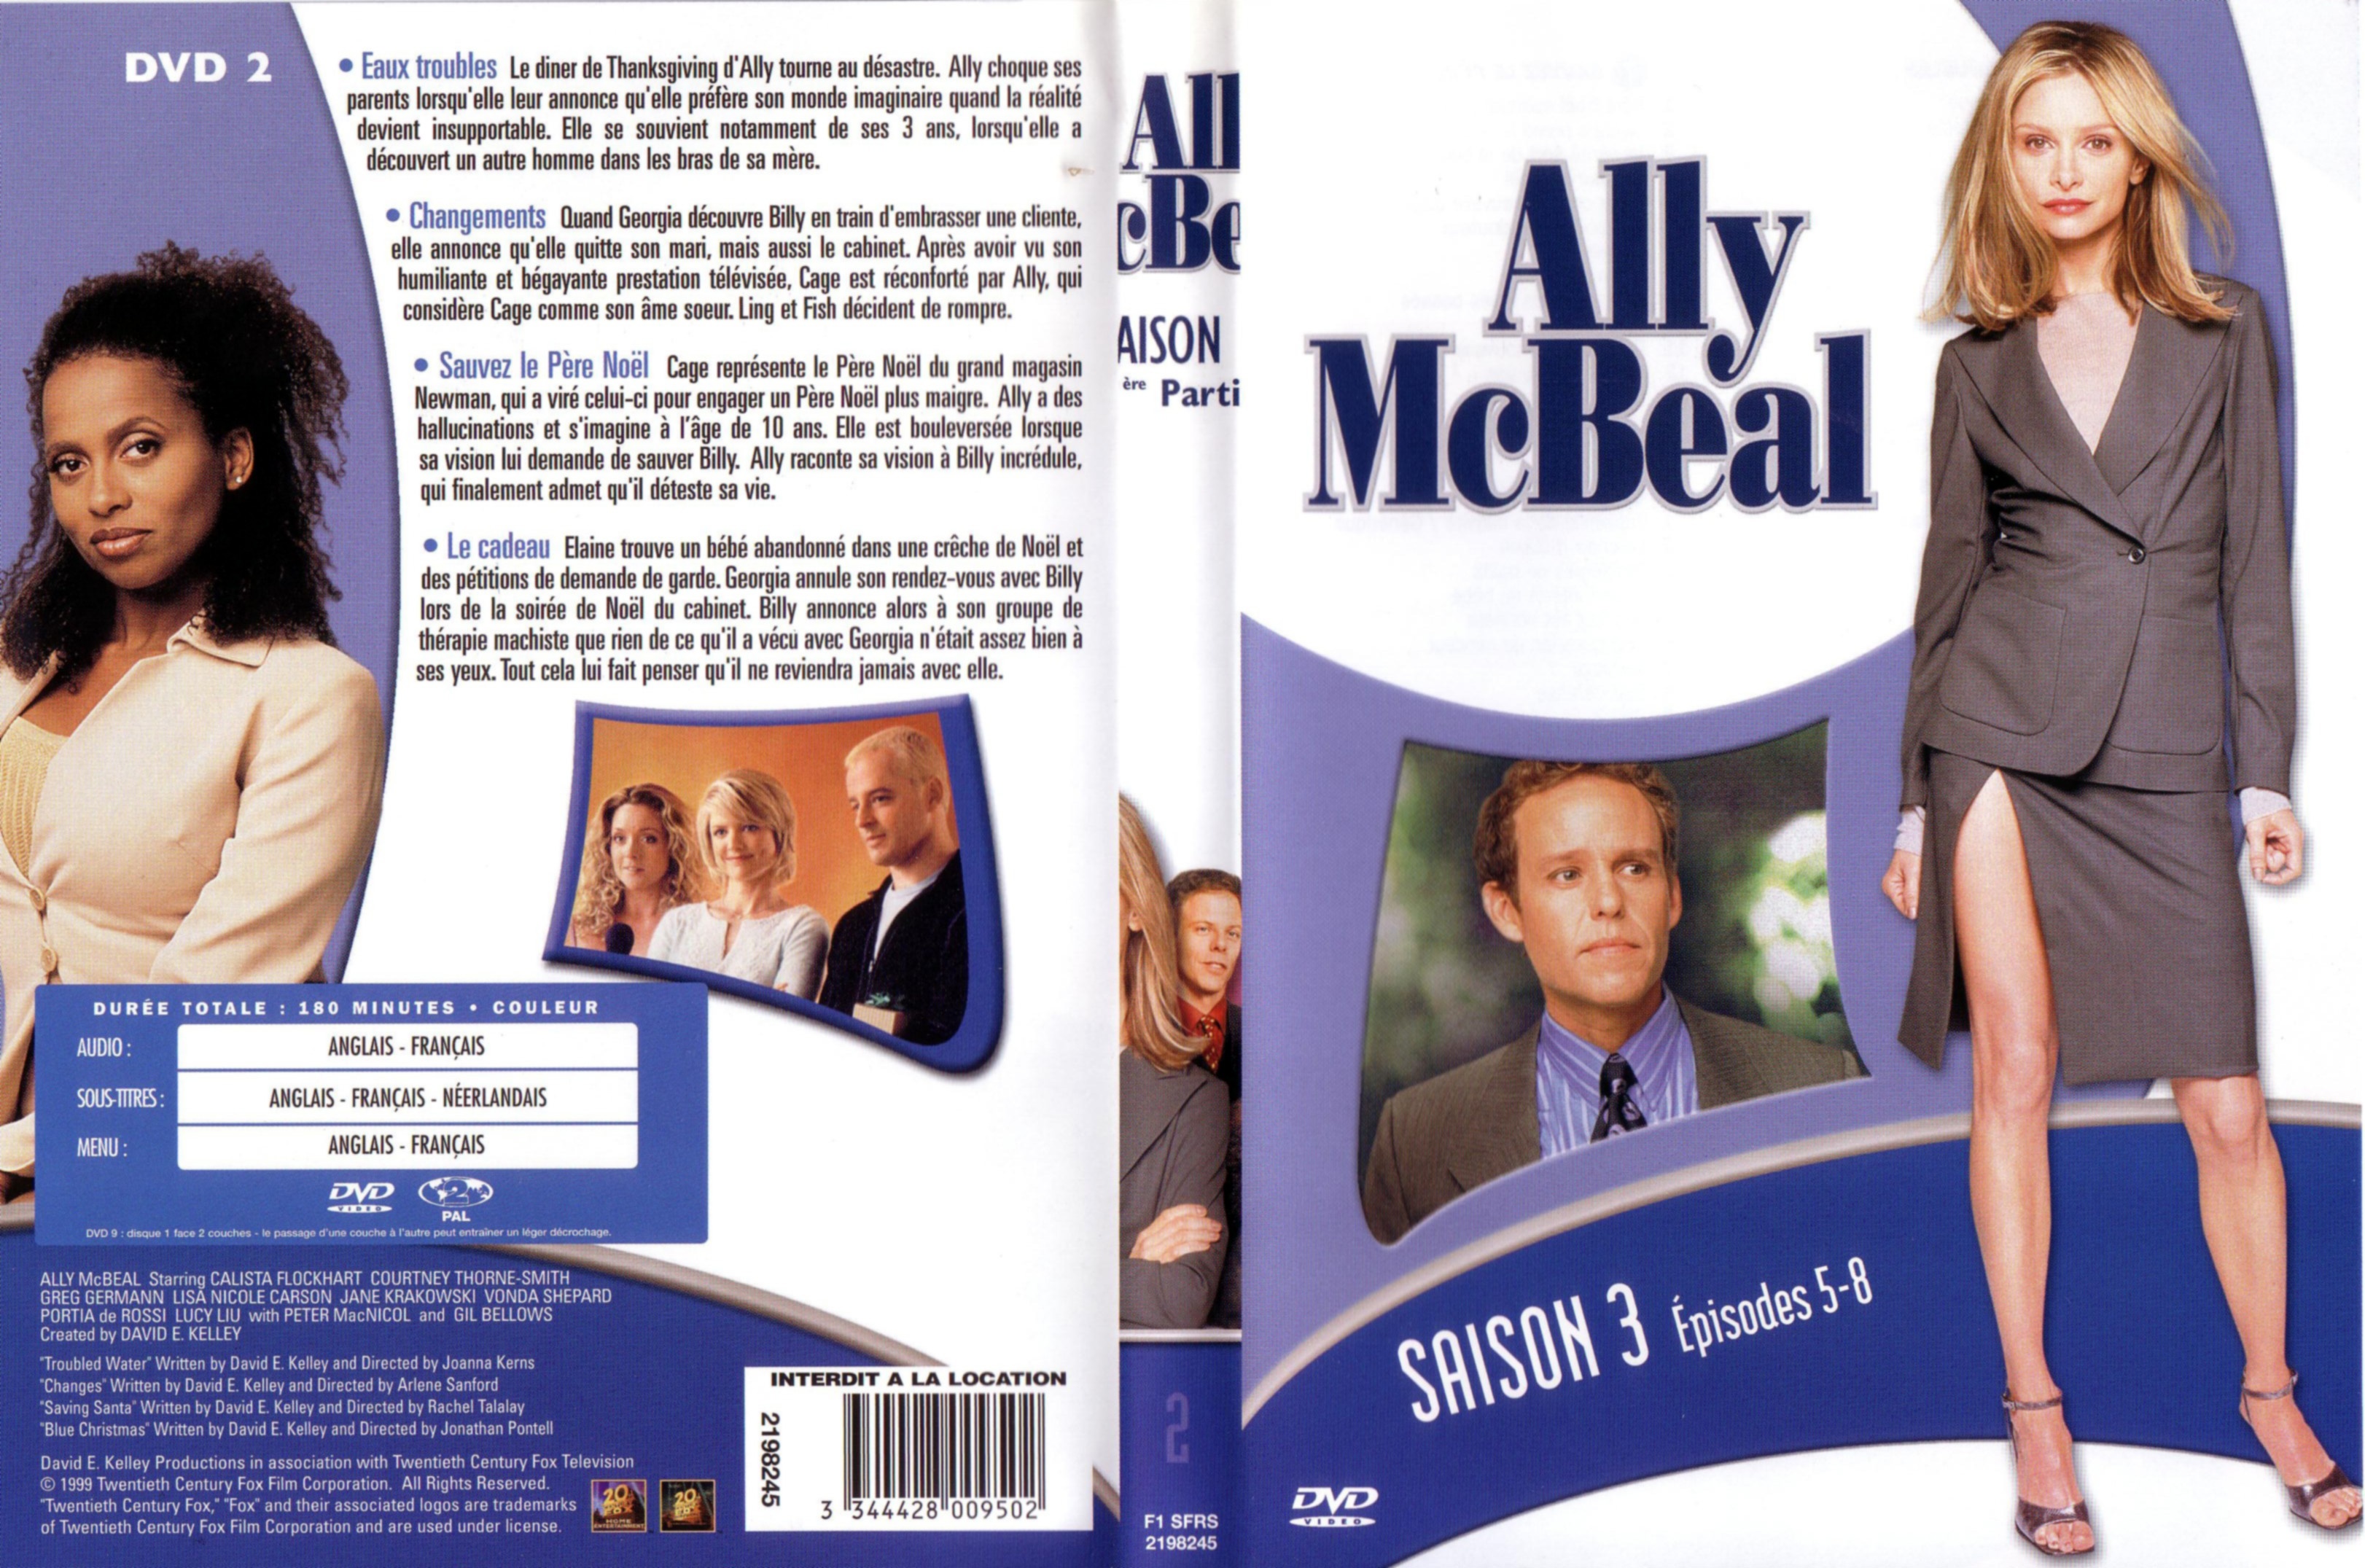 Jaquette DVD Ally McBeal saison 3 DVD 2